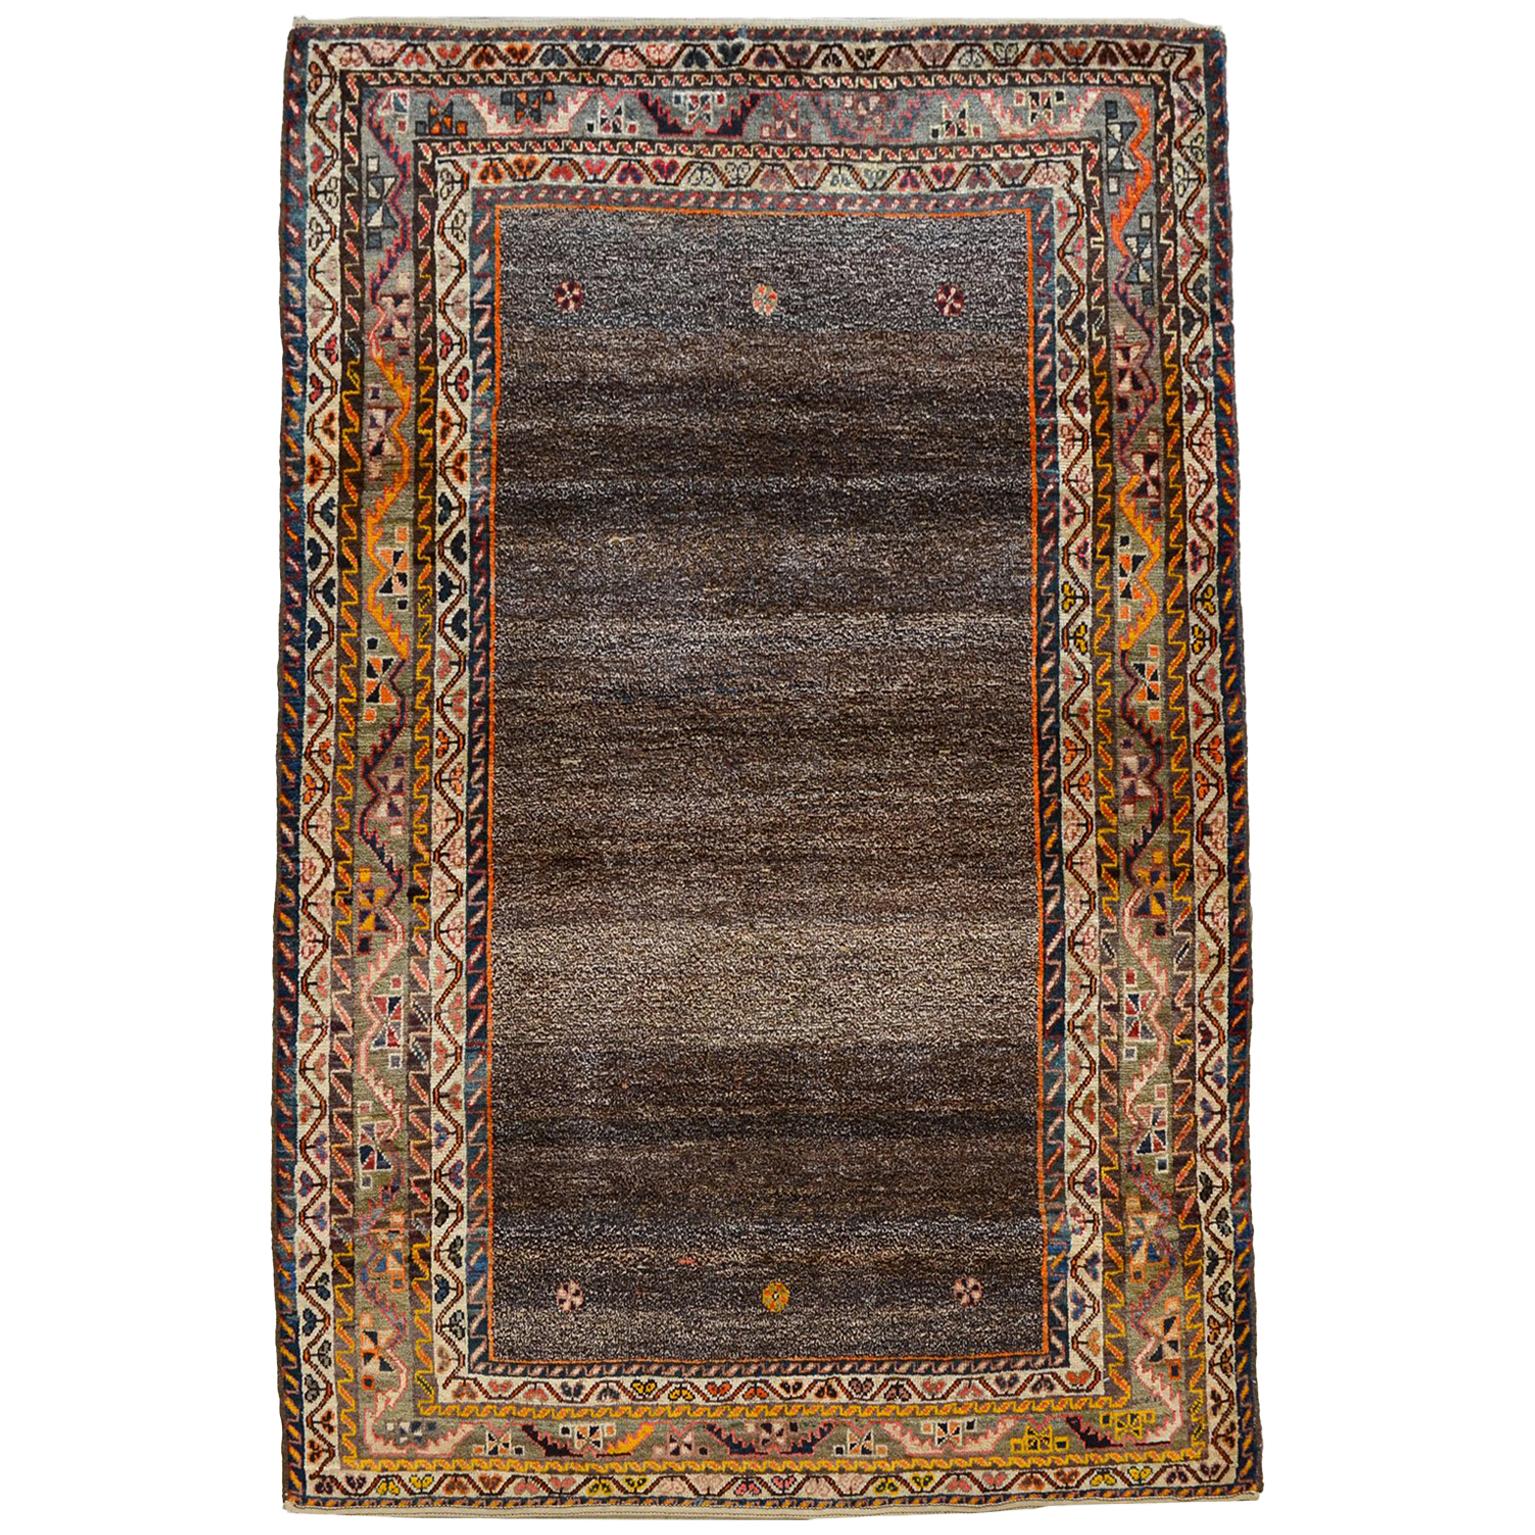 Antique 1910s Wool Persian Loristan Gabbeh Rug, 5' x 7' For Sale